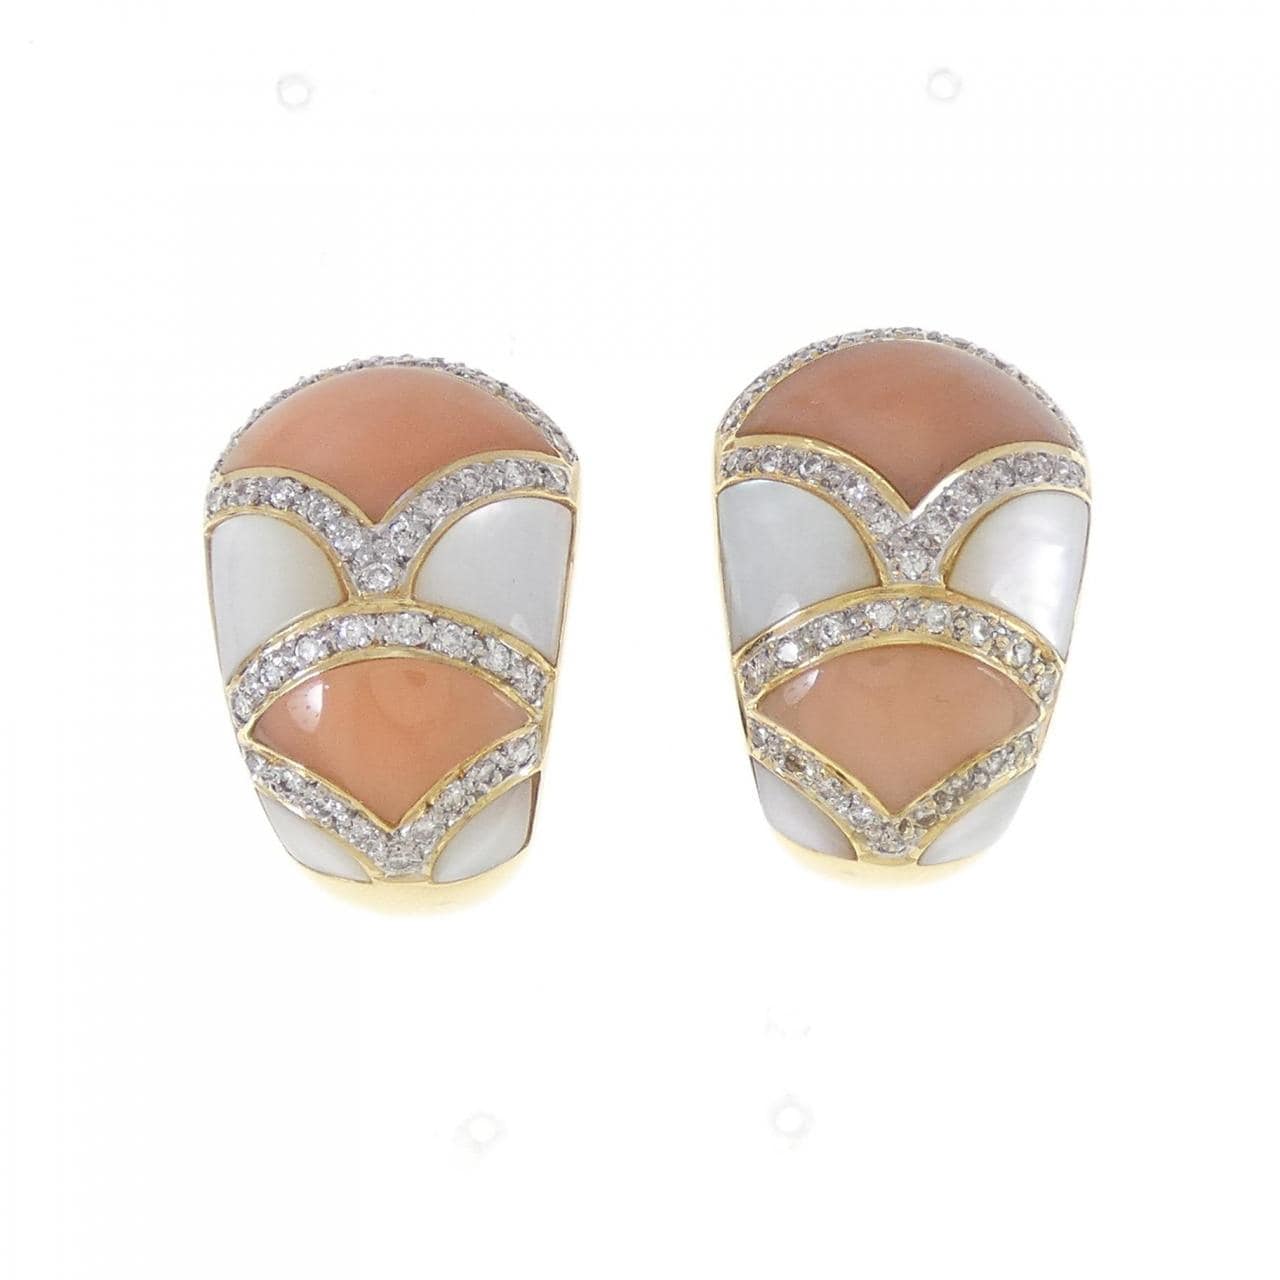 K18YG/K18WG colored stone earrings